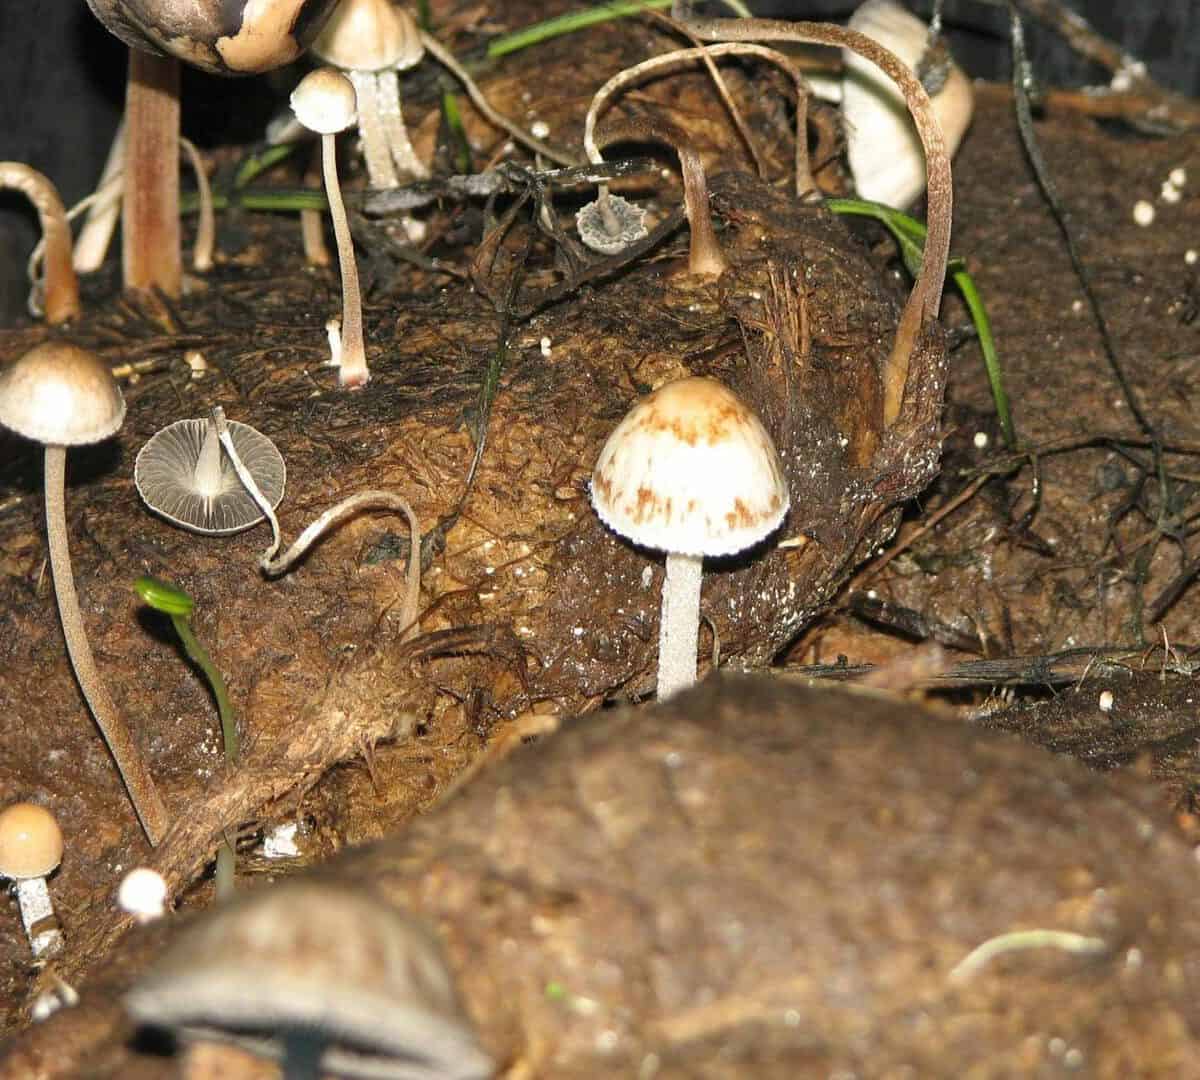 Thai Magic Mushroom